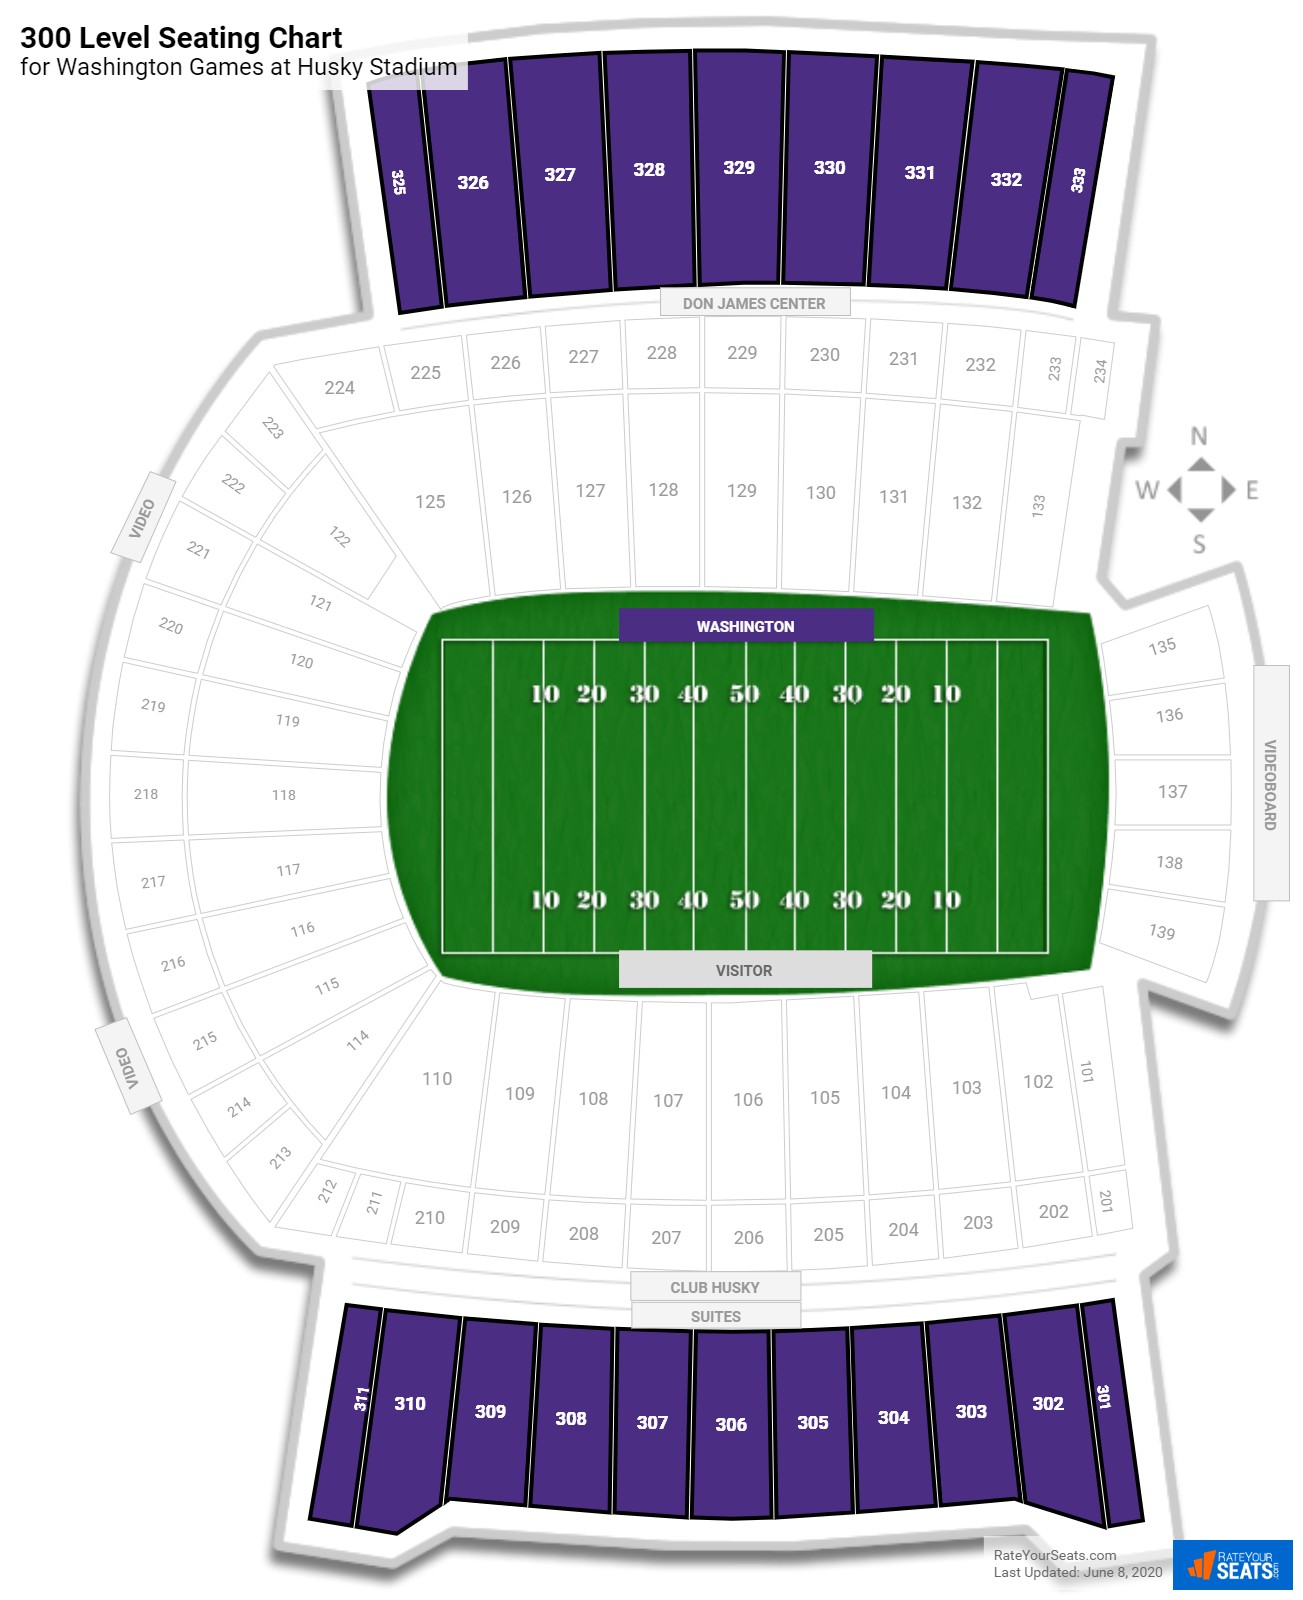 300 Level - Husky Stadium Football Seating - RateYourSeats.com